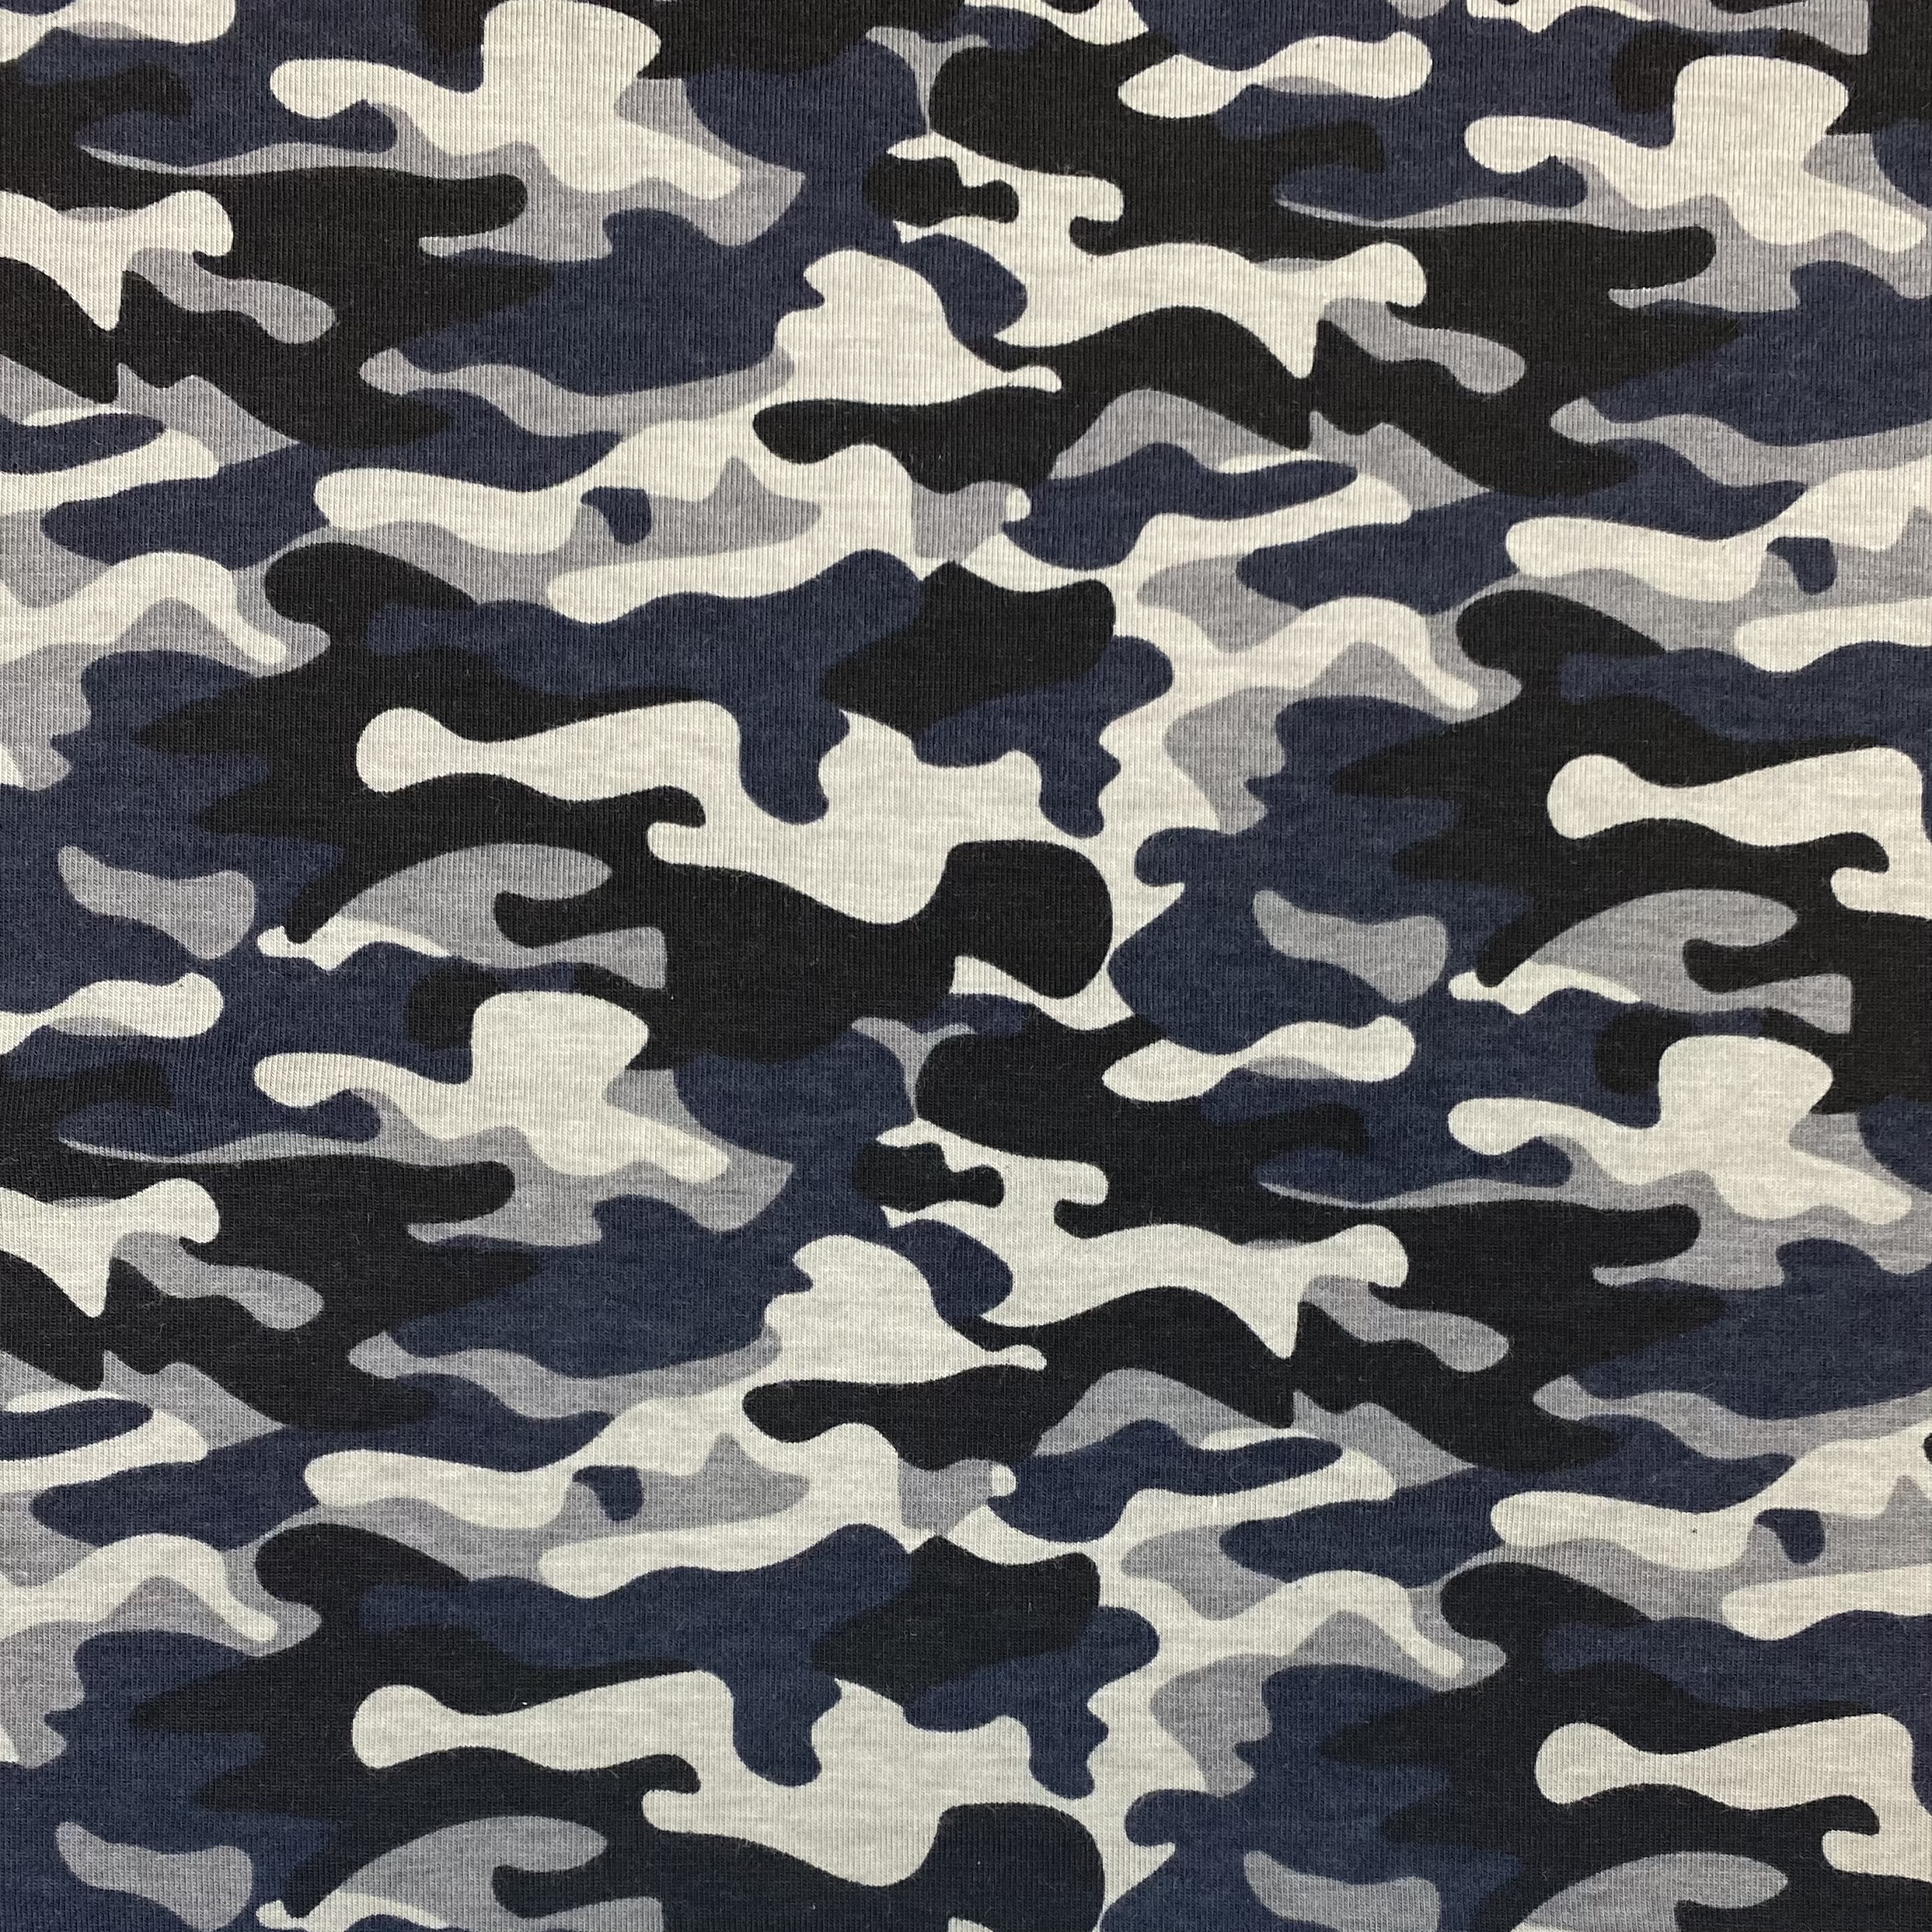 Baumwolljersey, Camouflage dunkelblau, Art. 340084.002 